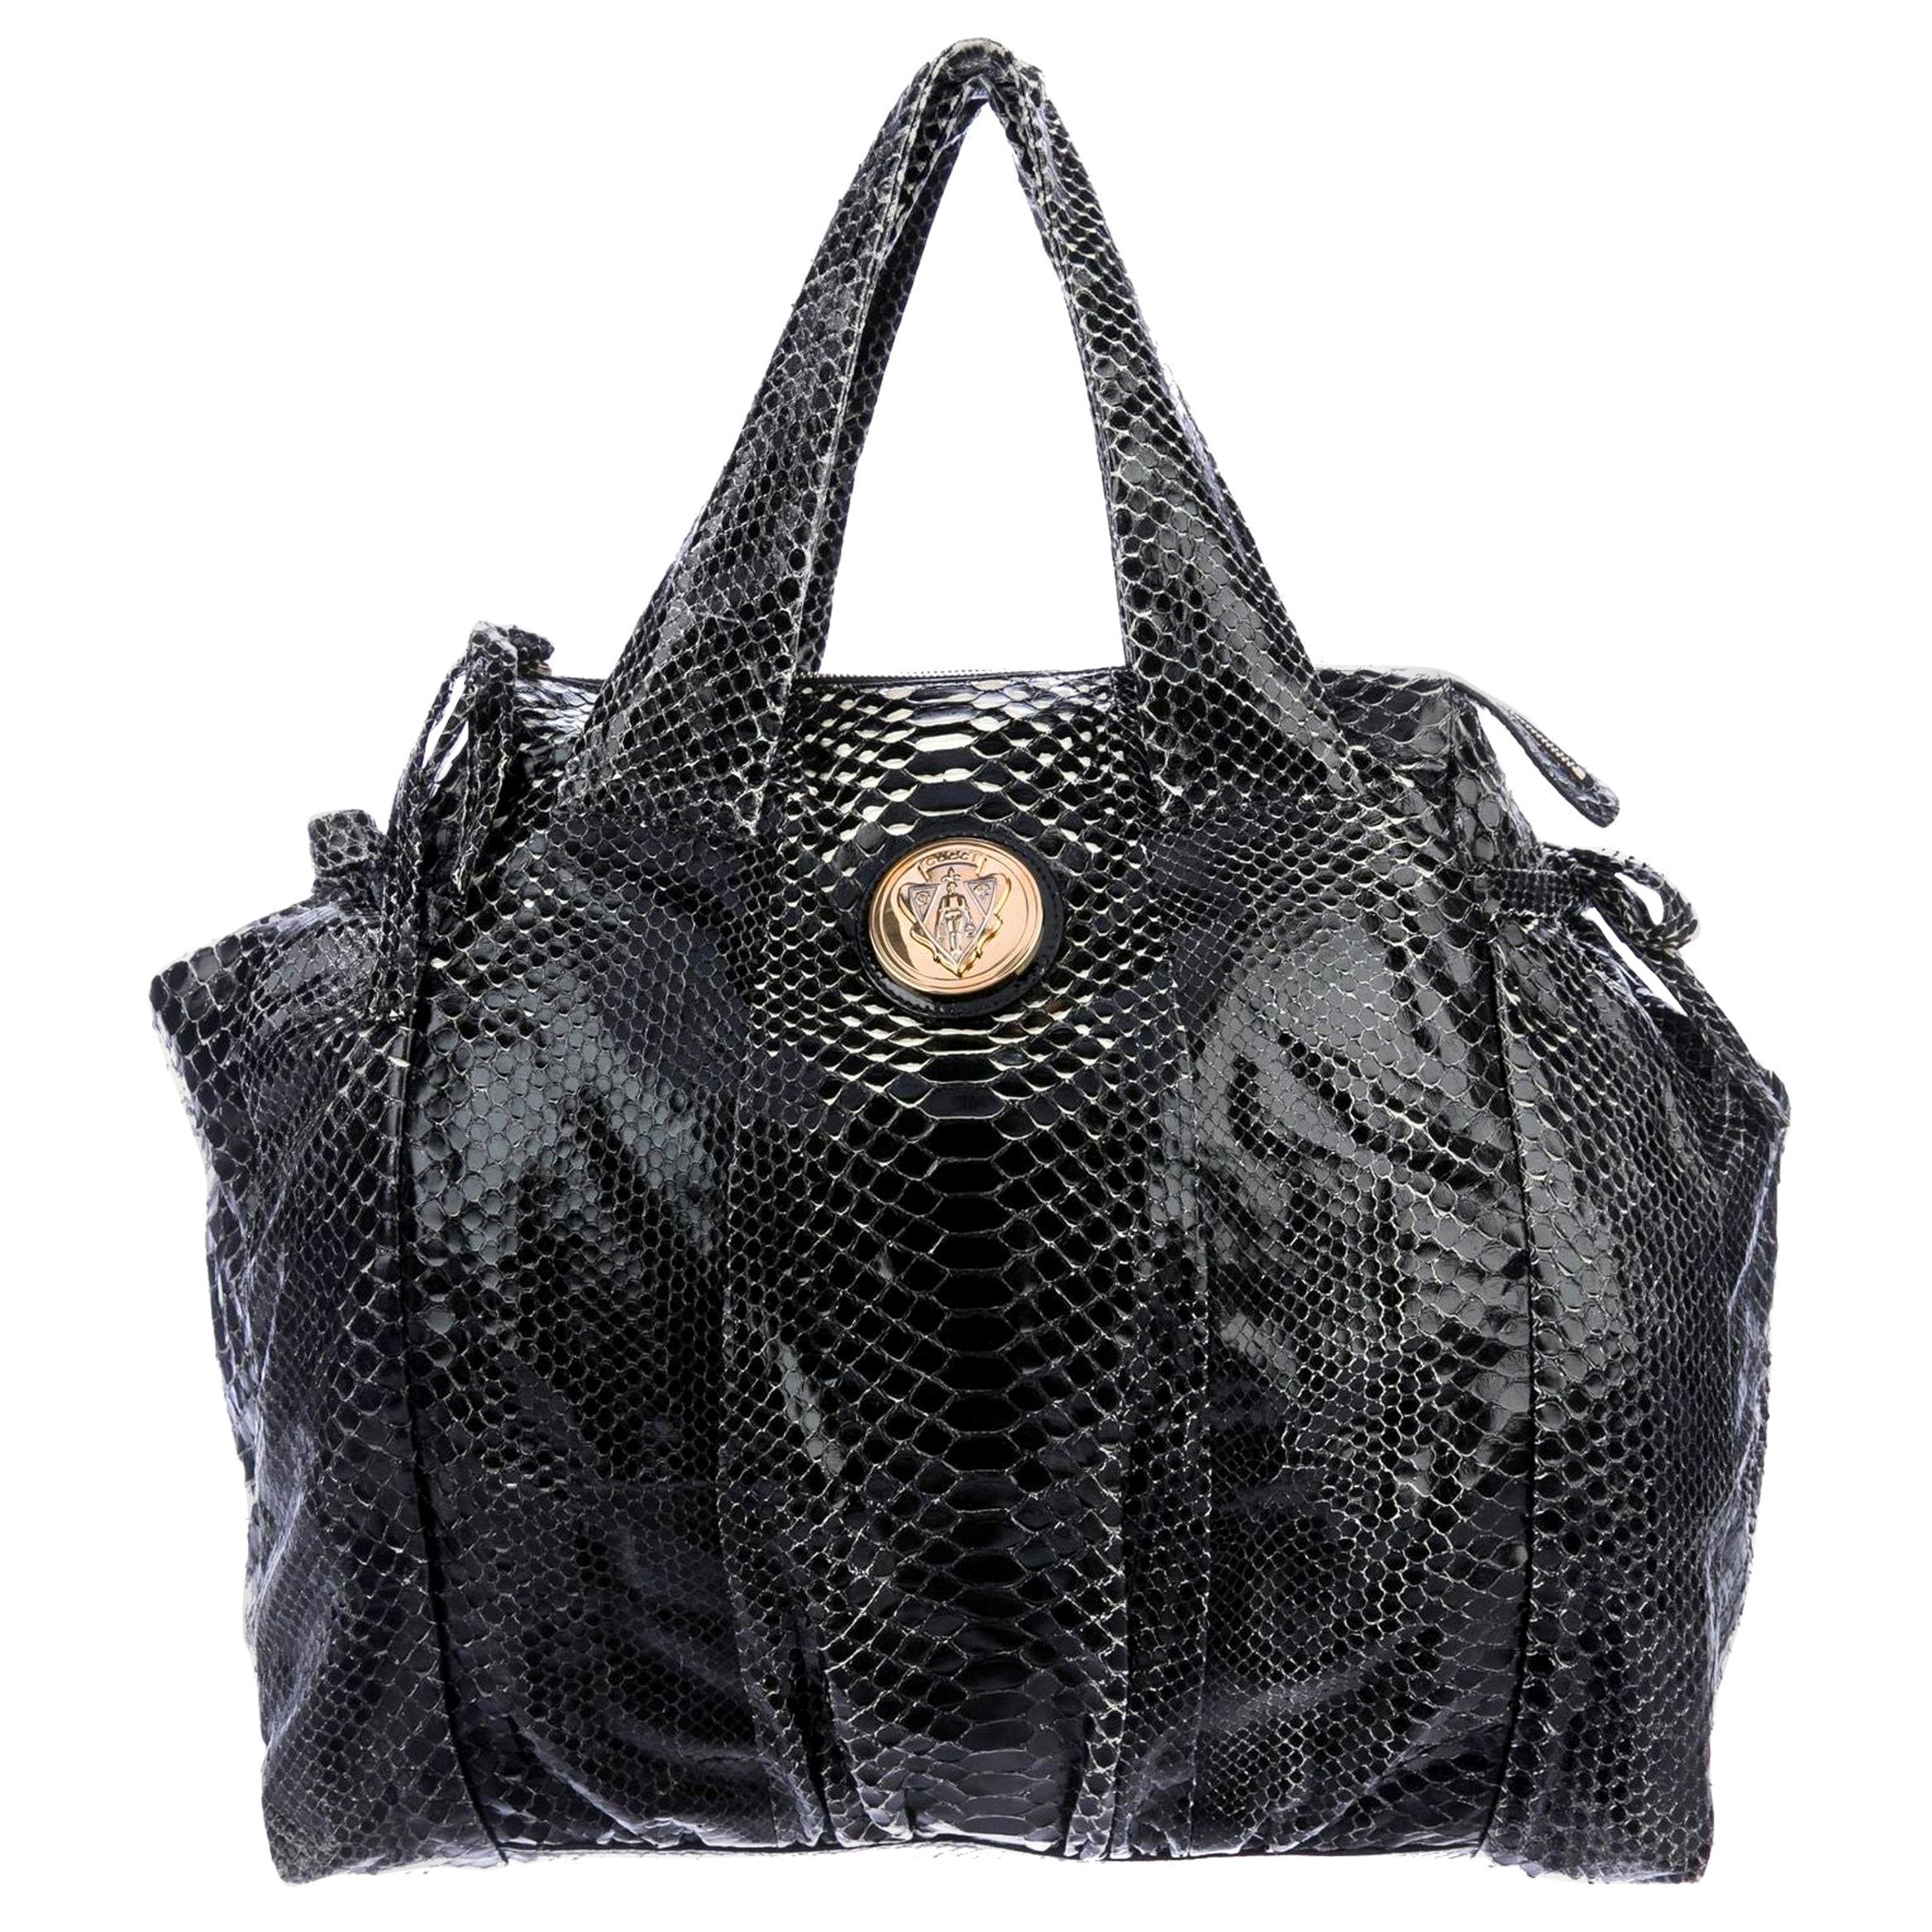 NEW Exotic XL Gucci Black Python Skin Tote Shoulder Bag with Gucci Crest Logo